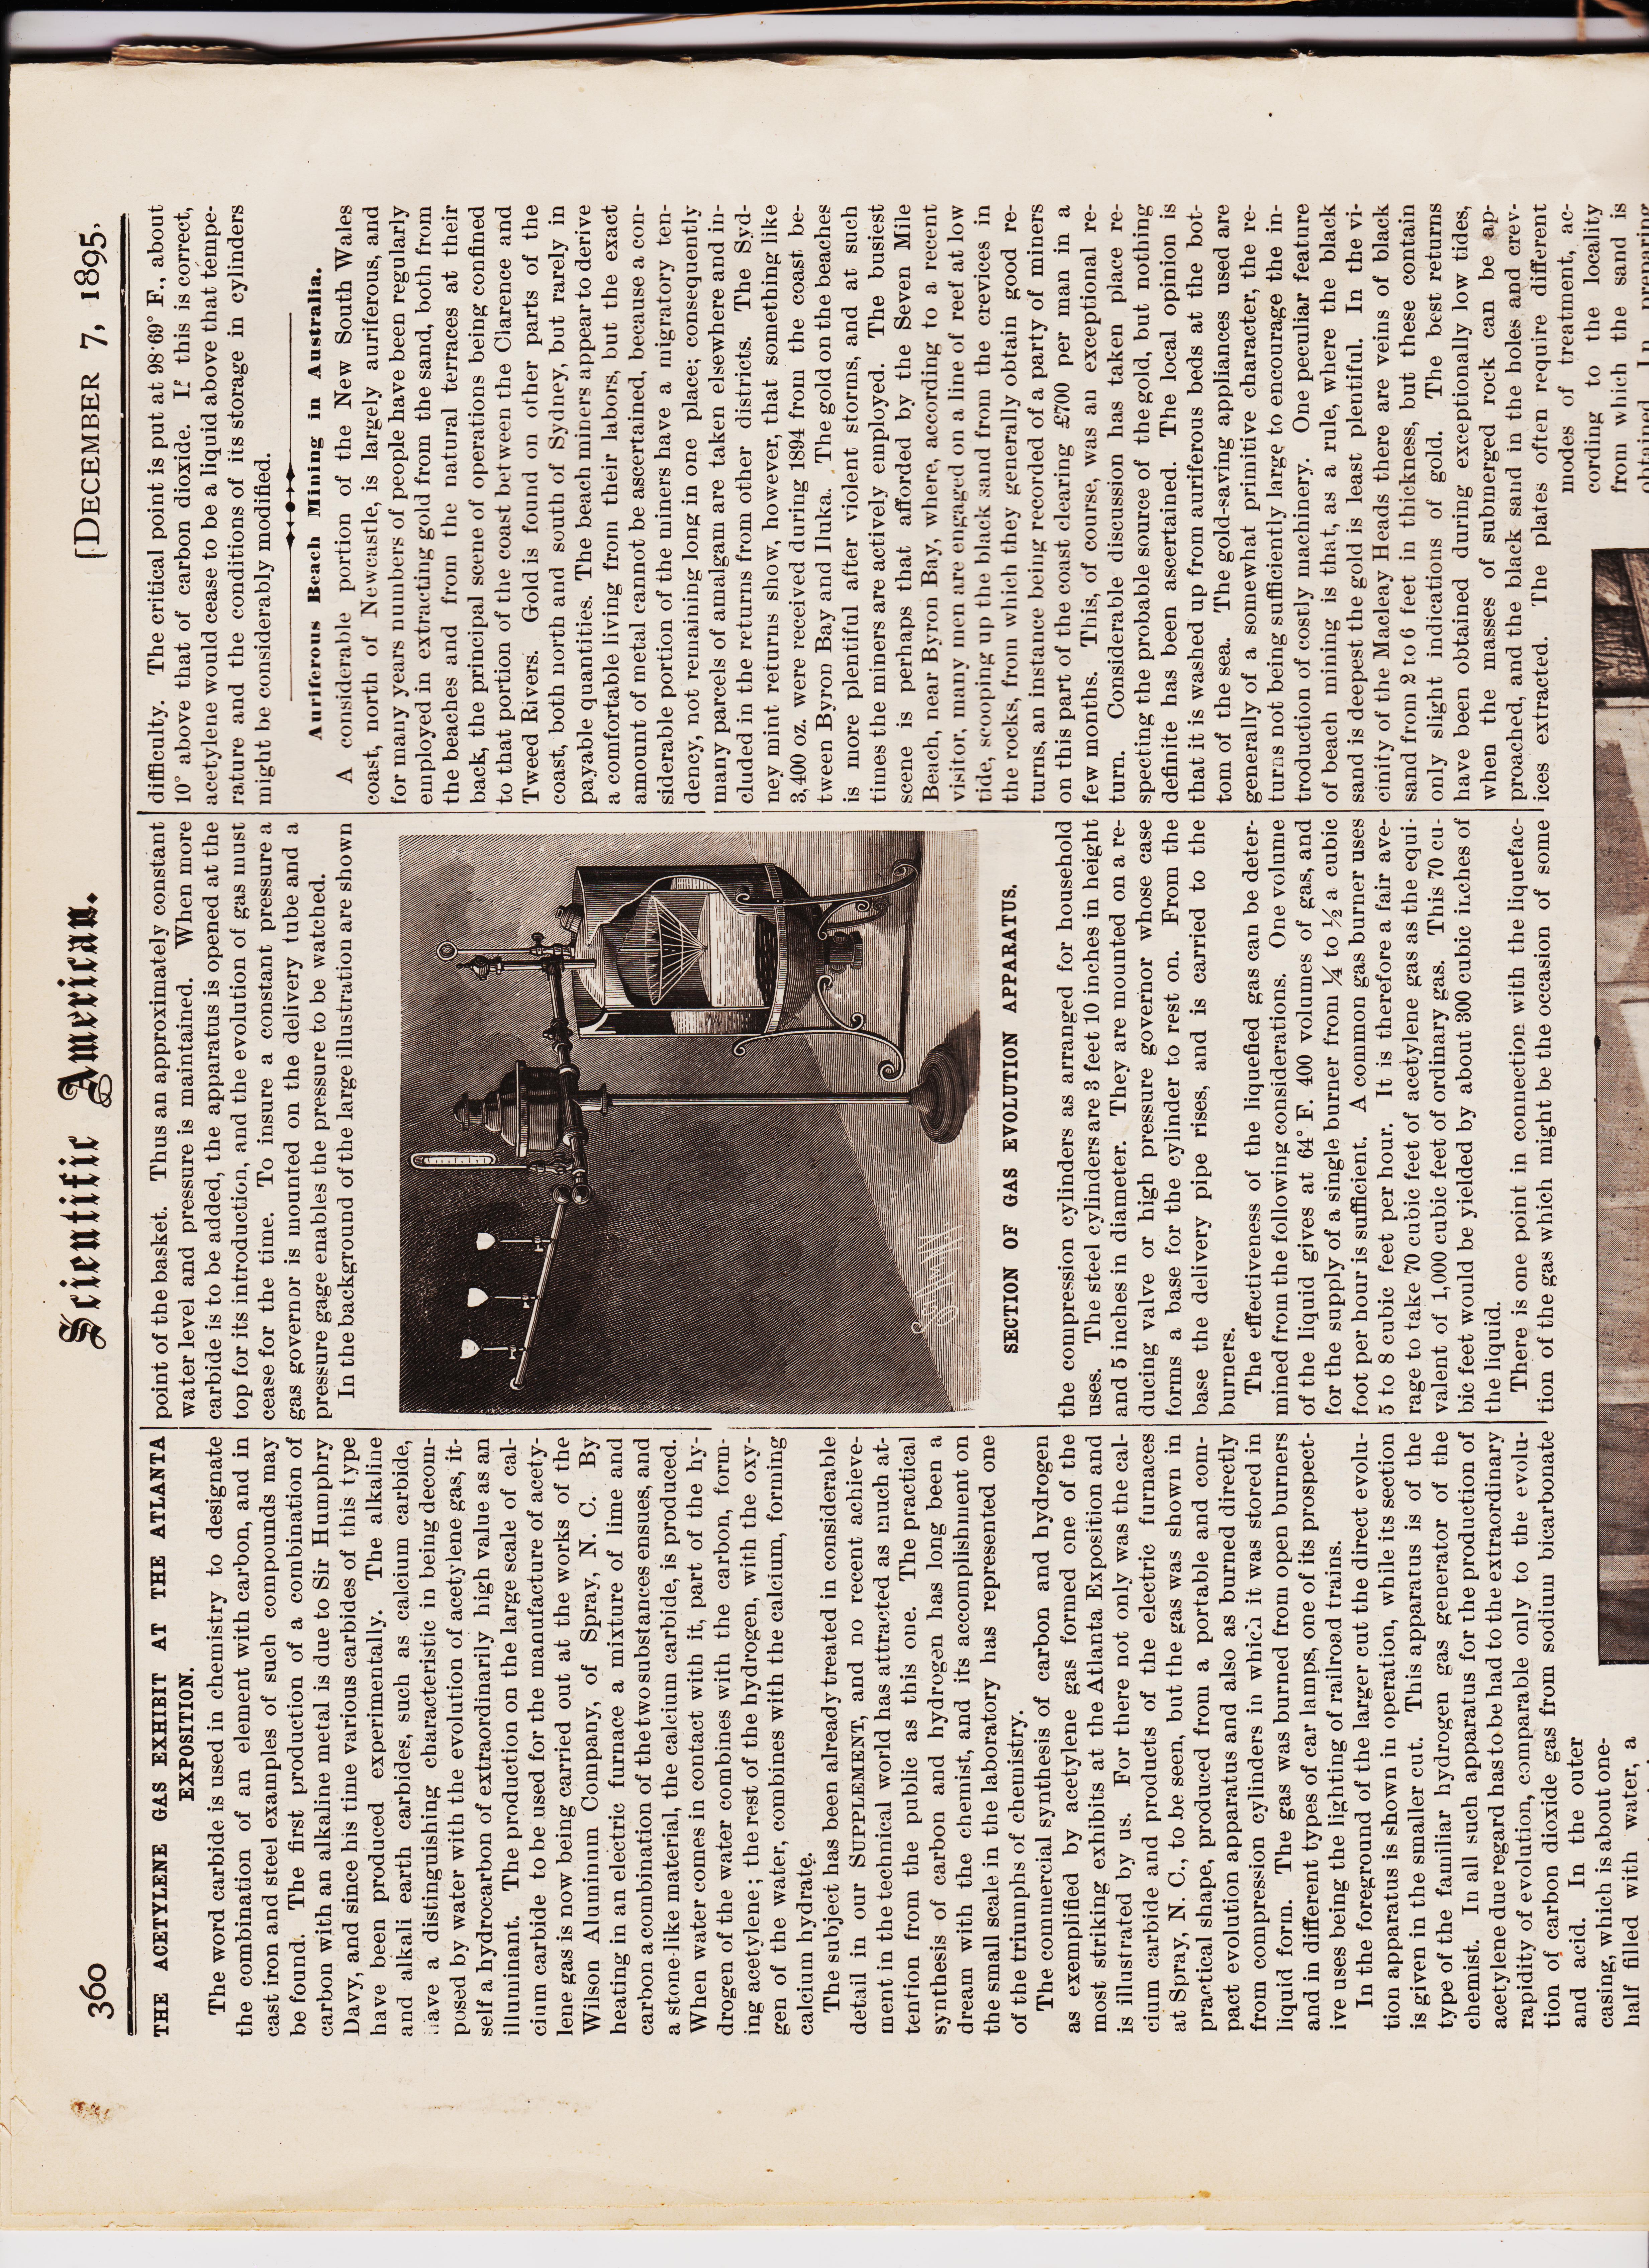 https://antiquemachinery.com/images-scientific-american/Scientific-American-1895-Dec-7-1895-pg-360-top-Acetylene-Gas-Evolution-Apparatus-Exhibit-from-Carbide-Generator-Atlanta-Exposition.jpeg